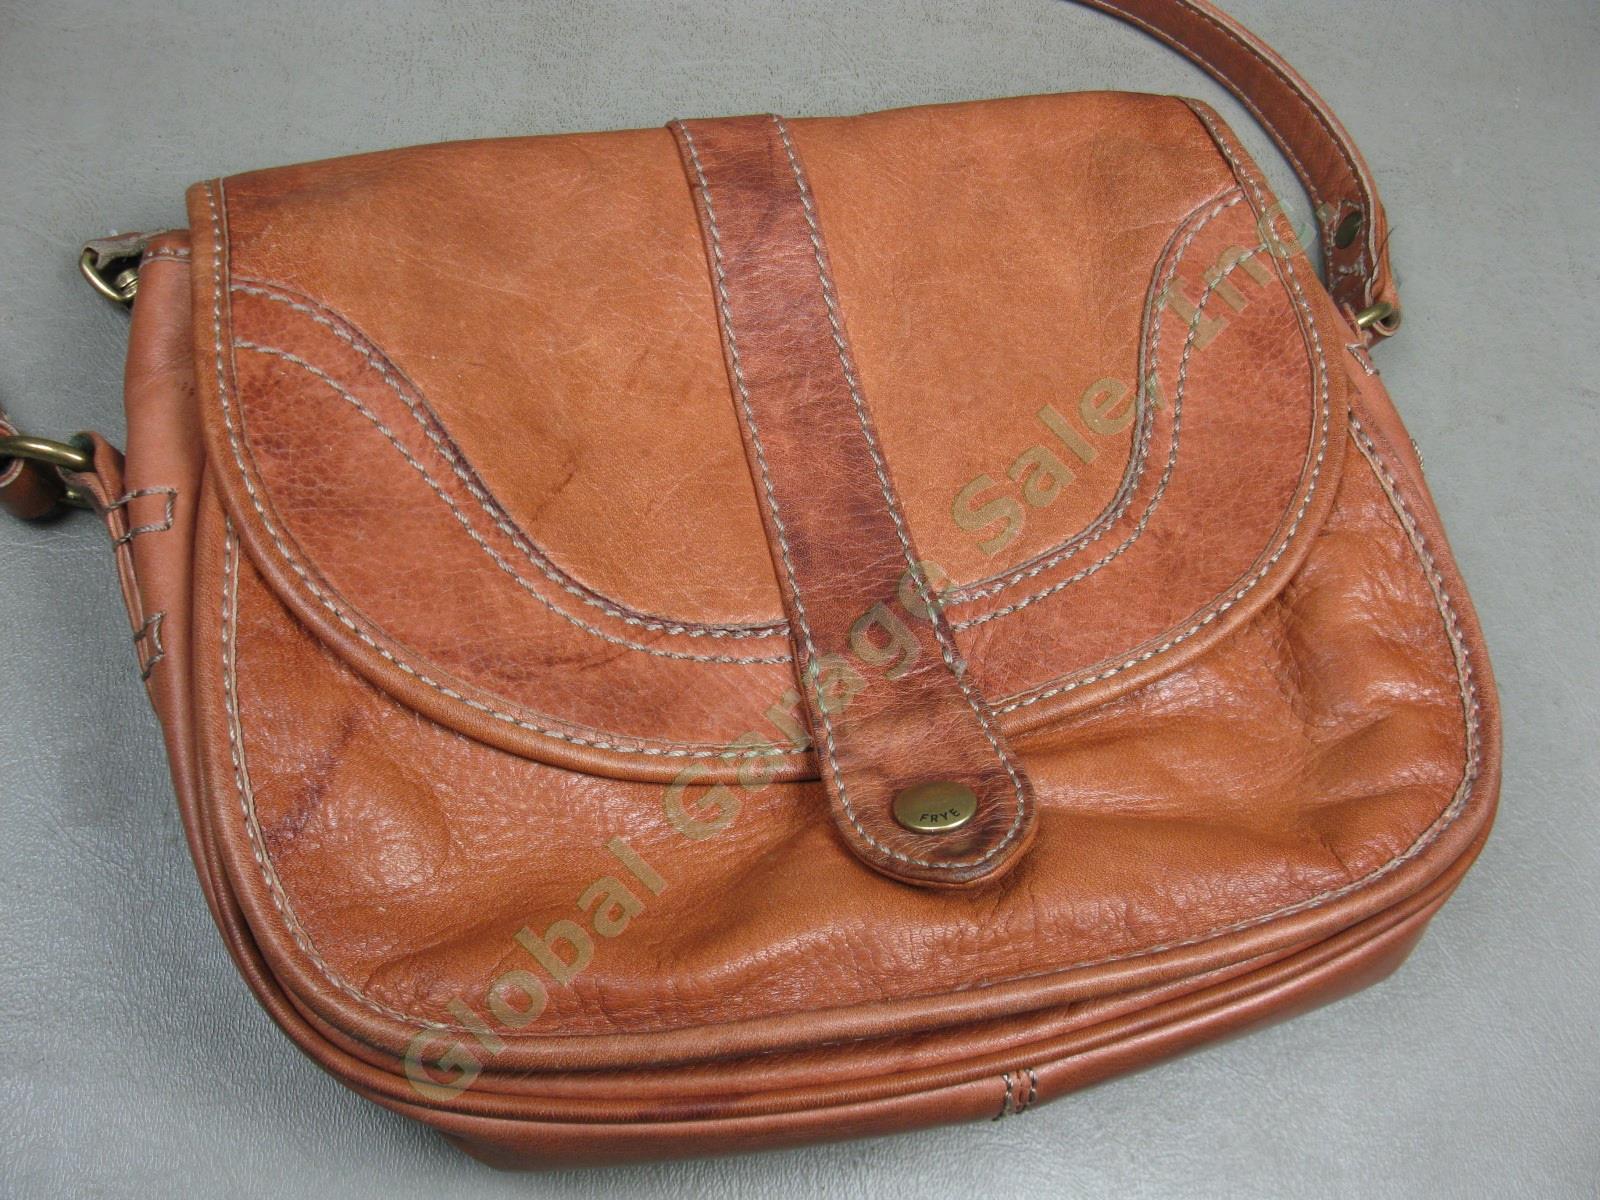 Frye Campus Saddle Cross Body Leather Handbag Clutch DB891 $298 Retail NORESERVE 1